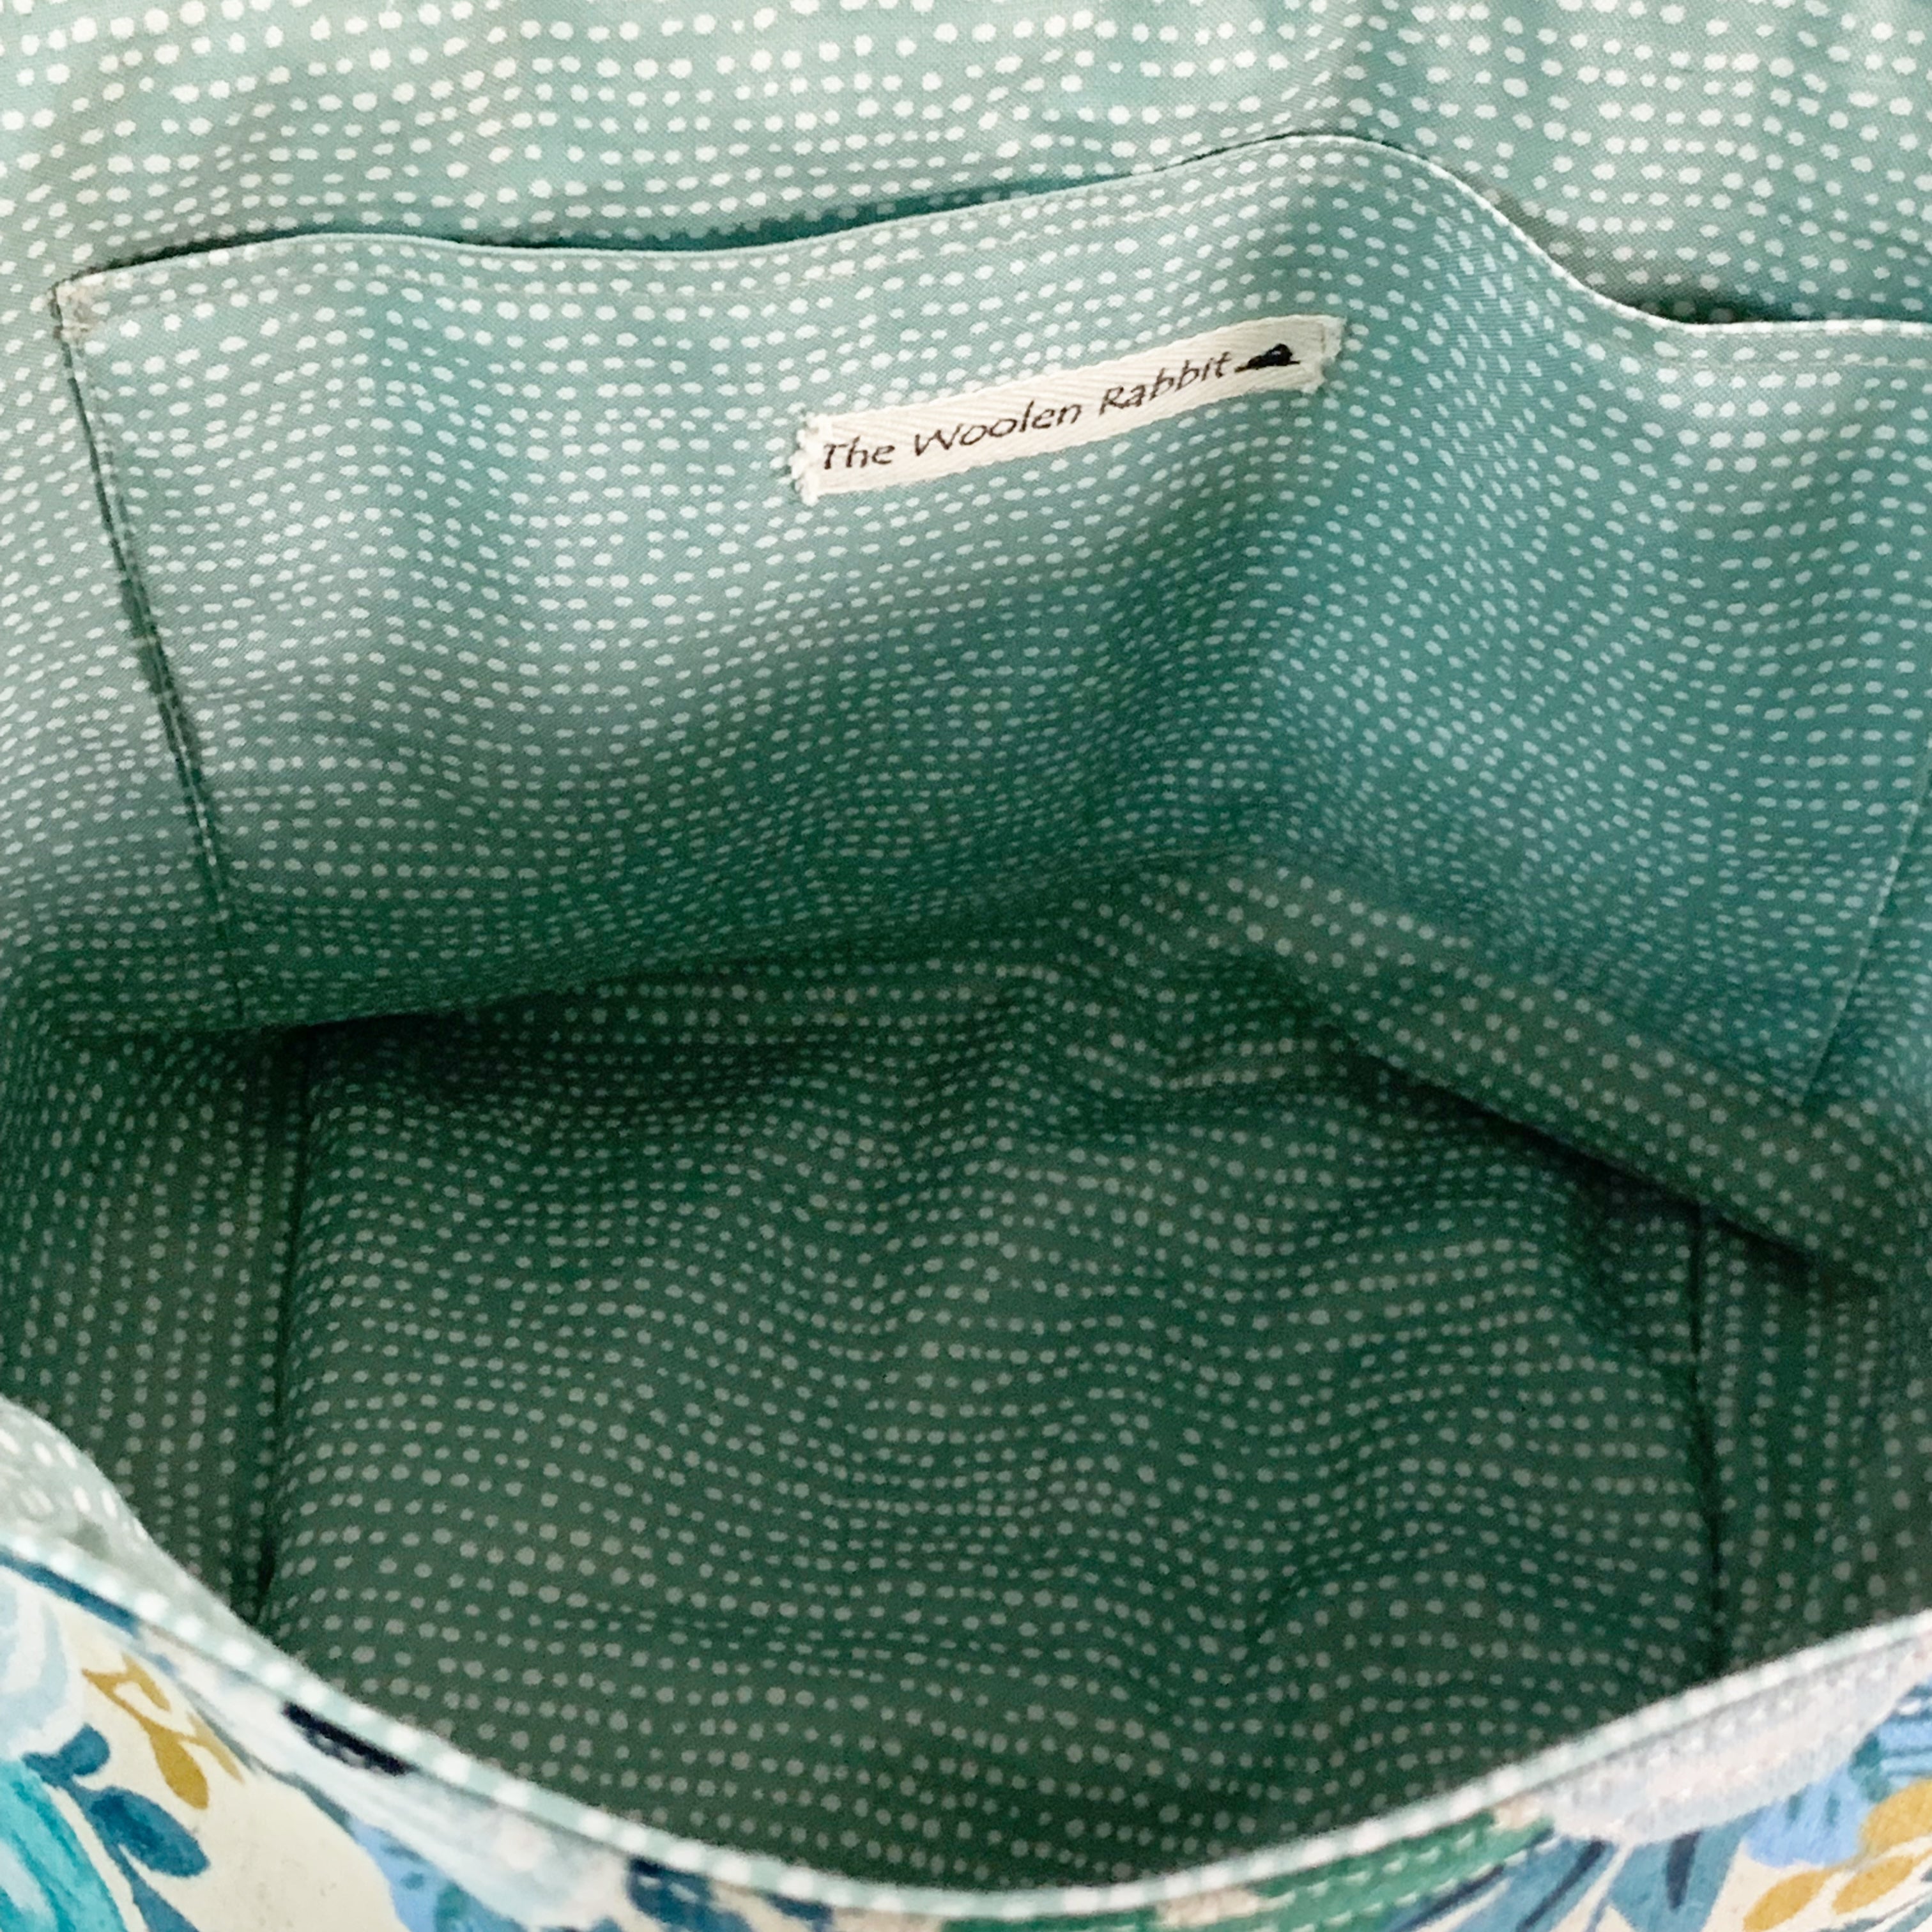 Bunny Bucket Bag ~ Happy Blue Flowers